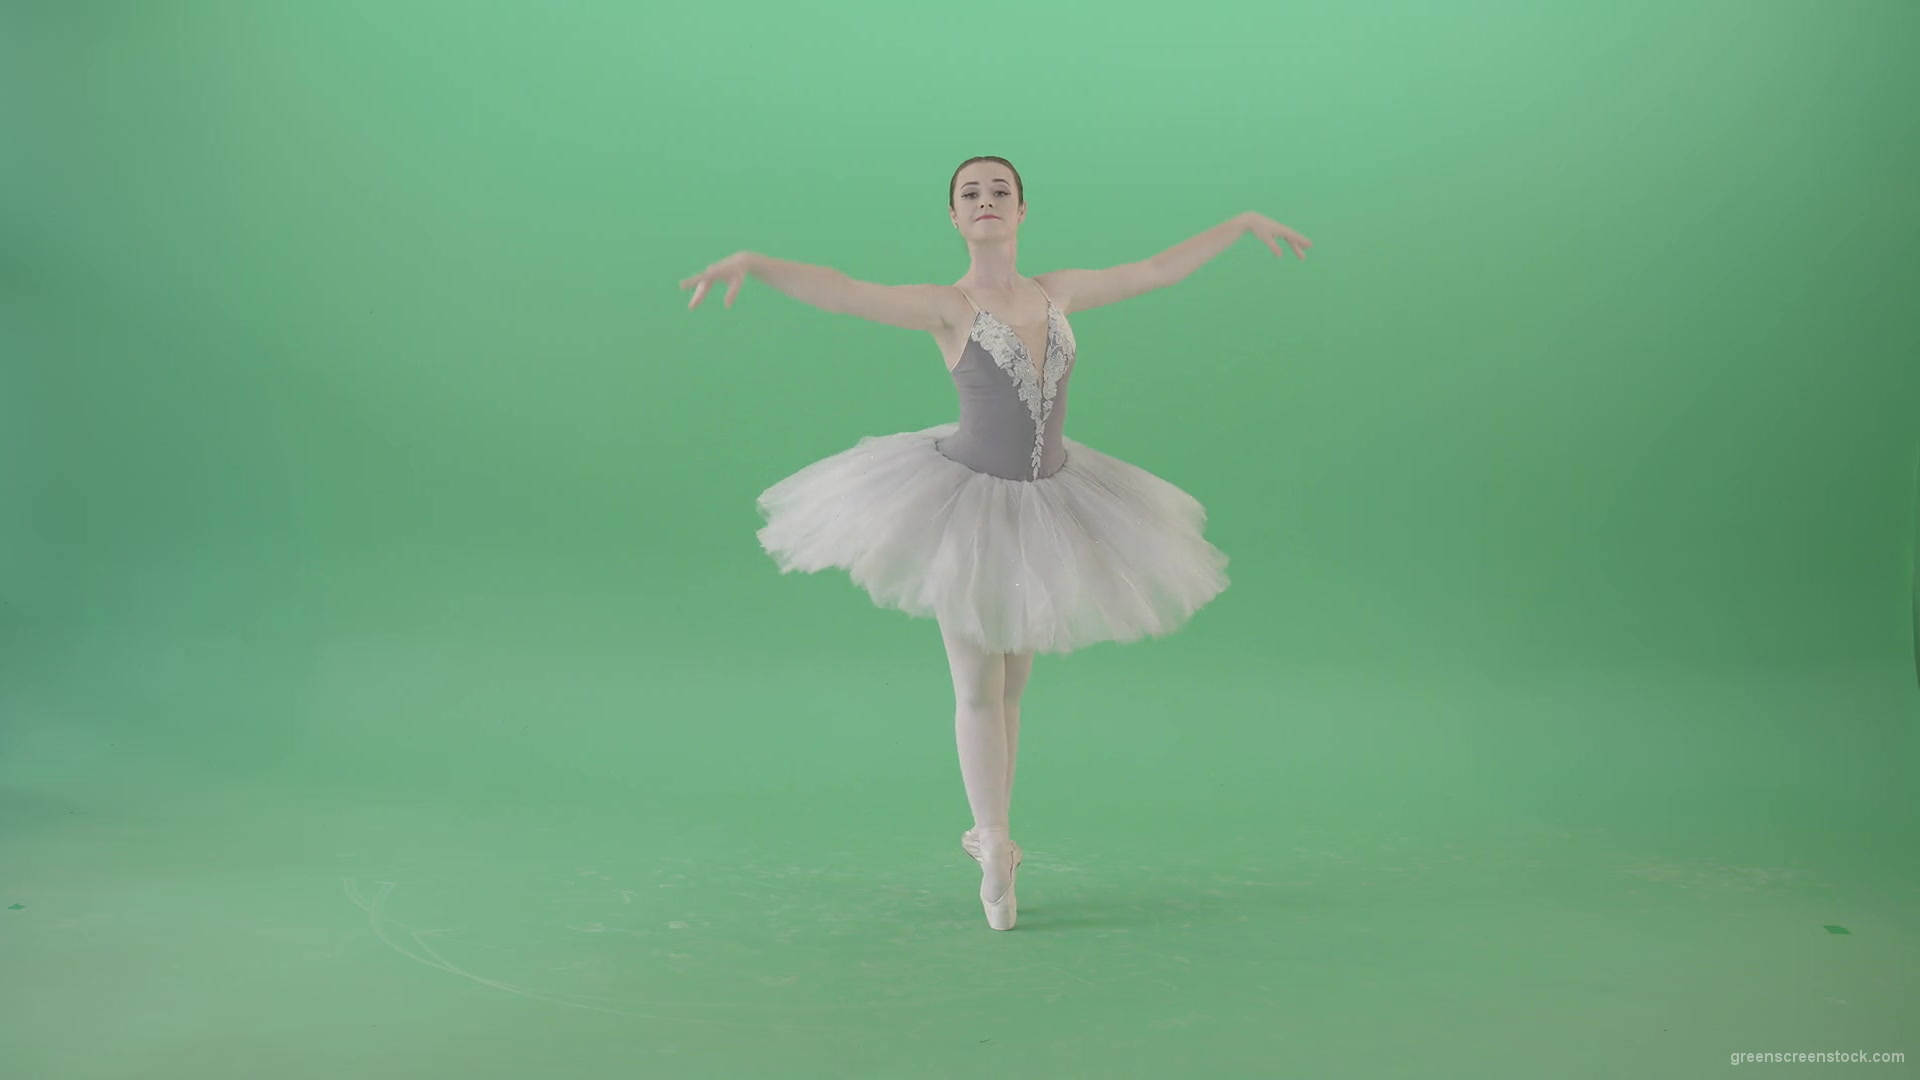 Ballerina-Woman-dancing-elegnatly-ballet-swan-lake-dance-in-green-screen-studio-4K-Video-Footage-1920_008 Green Screen Stock